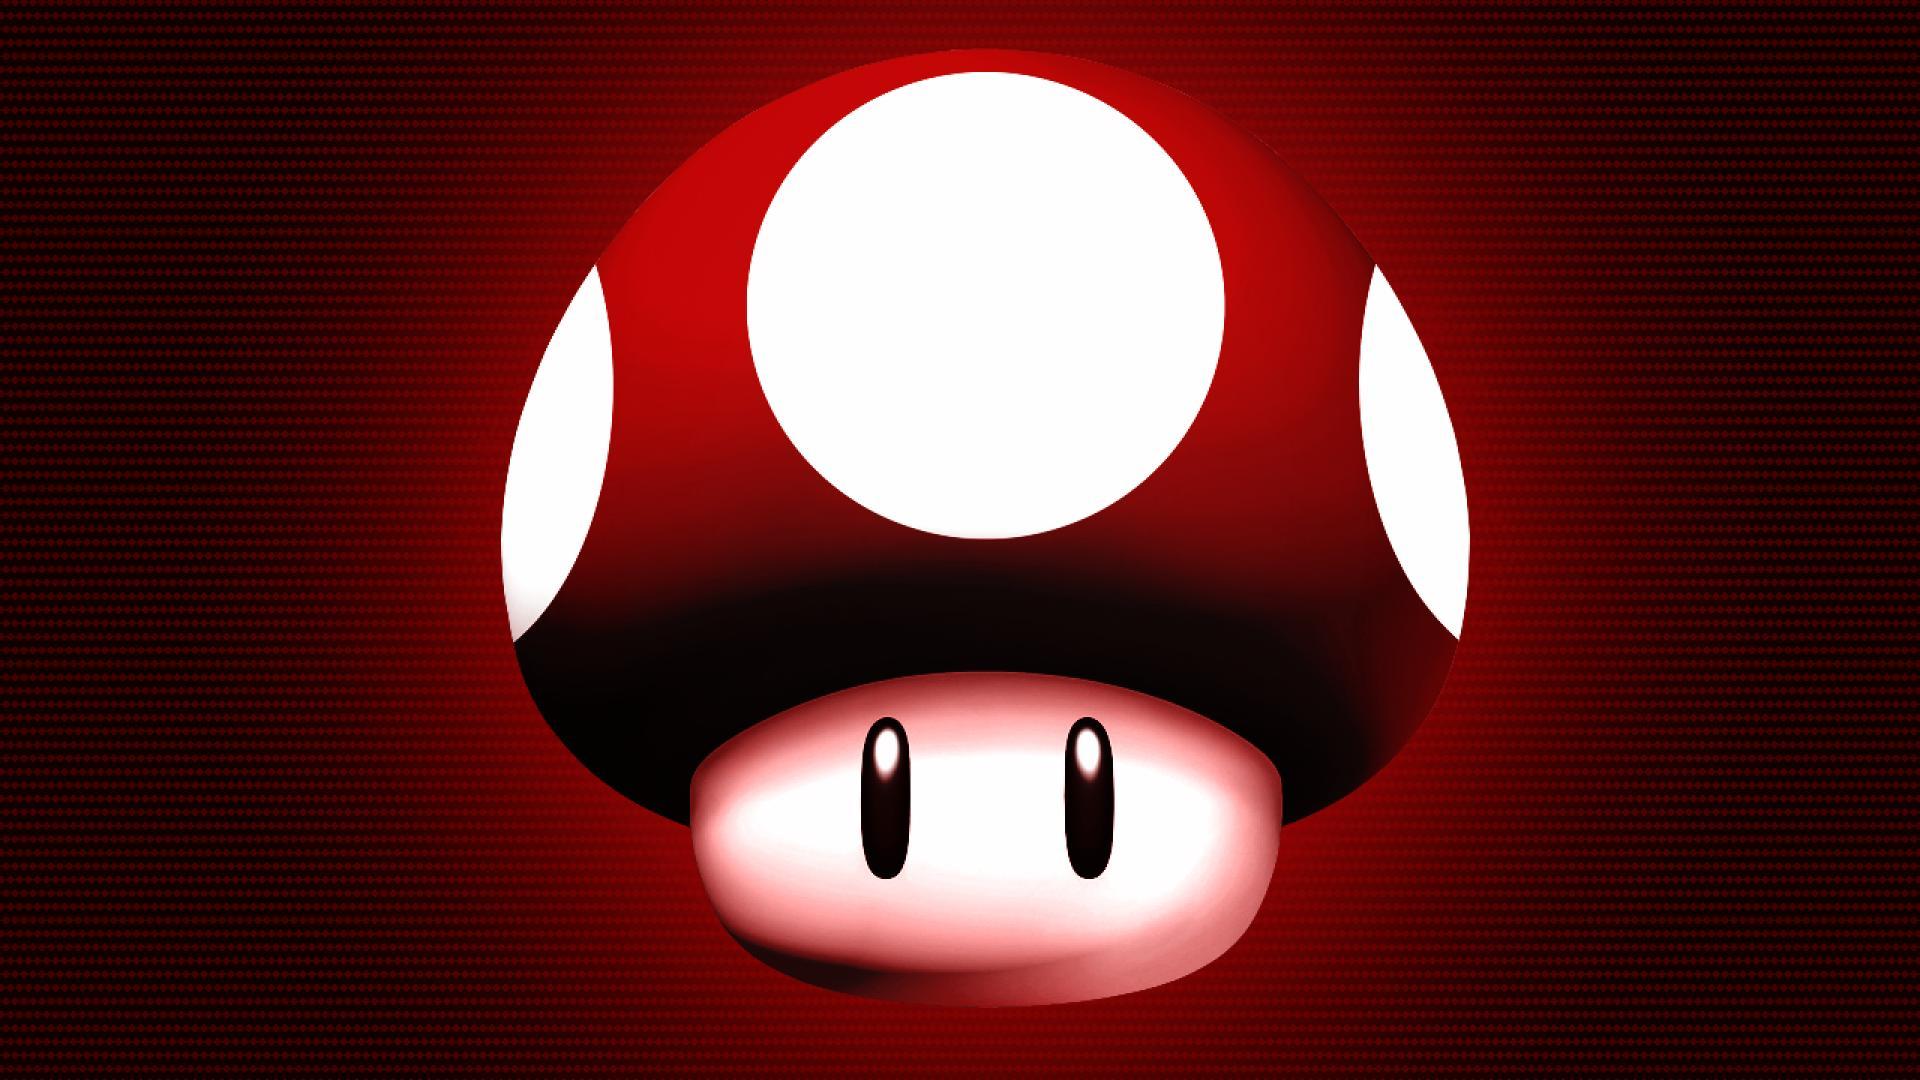 Super Mario Cute Iconic Nintendo Character Wallpaper. Foolhardi